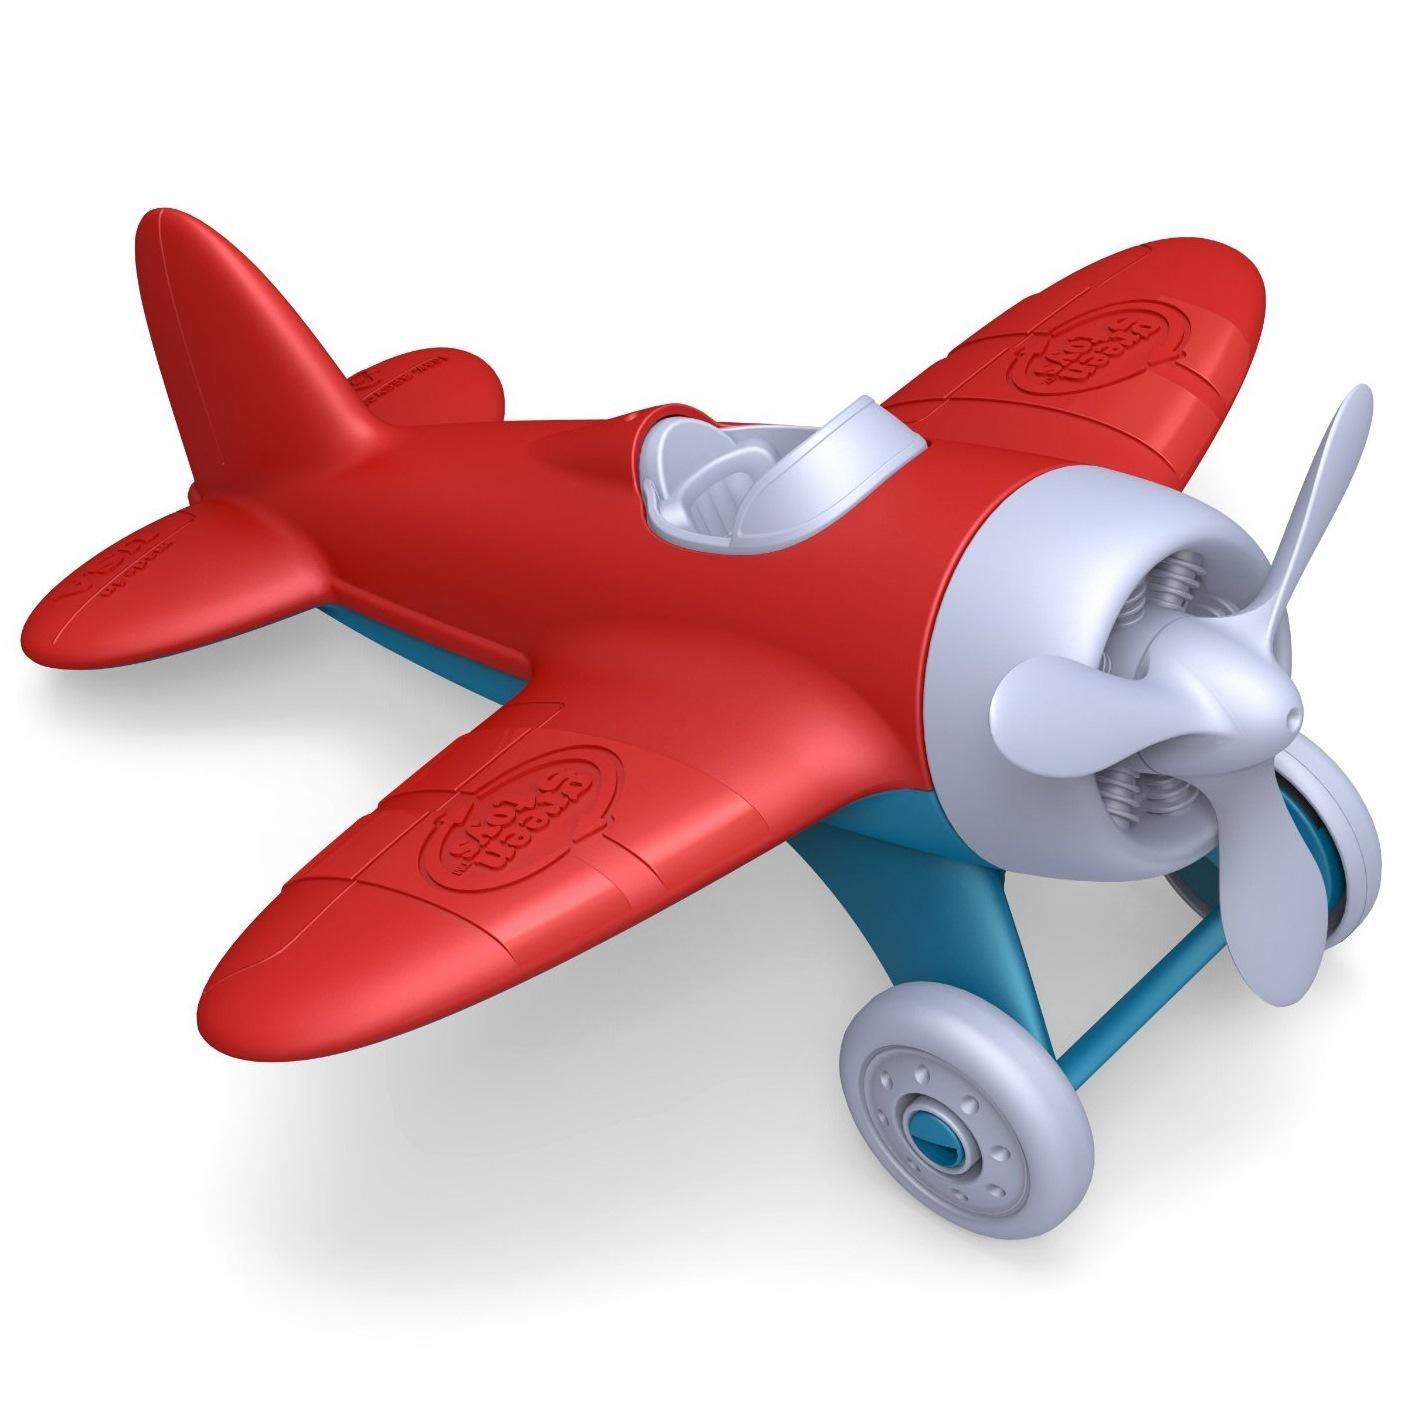 Free toy plane.